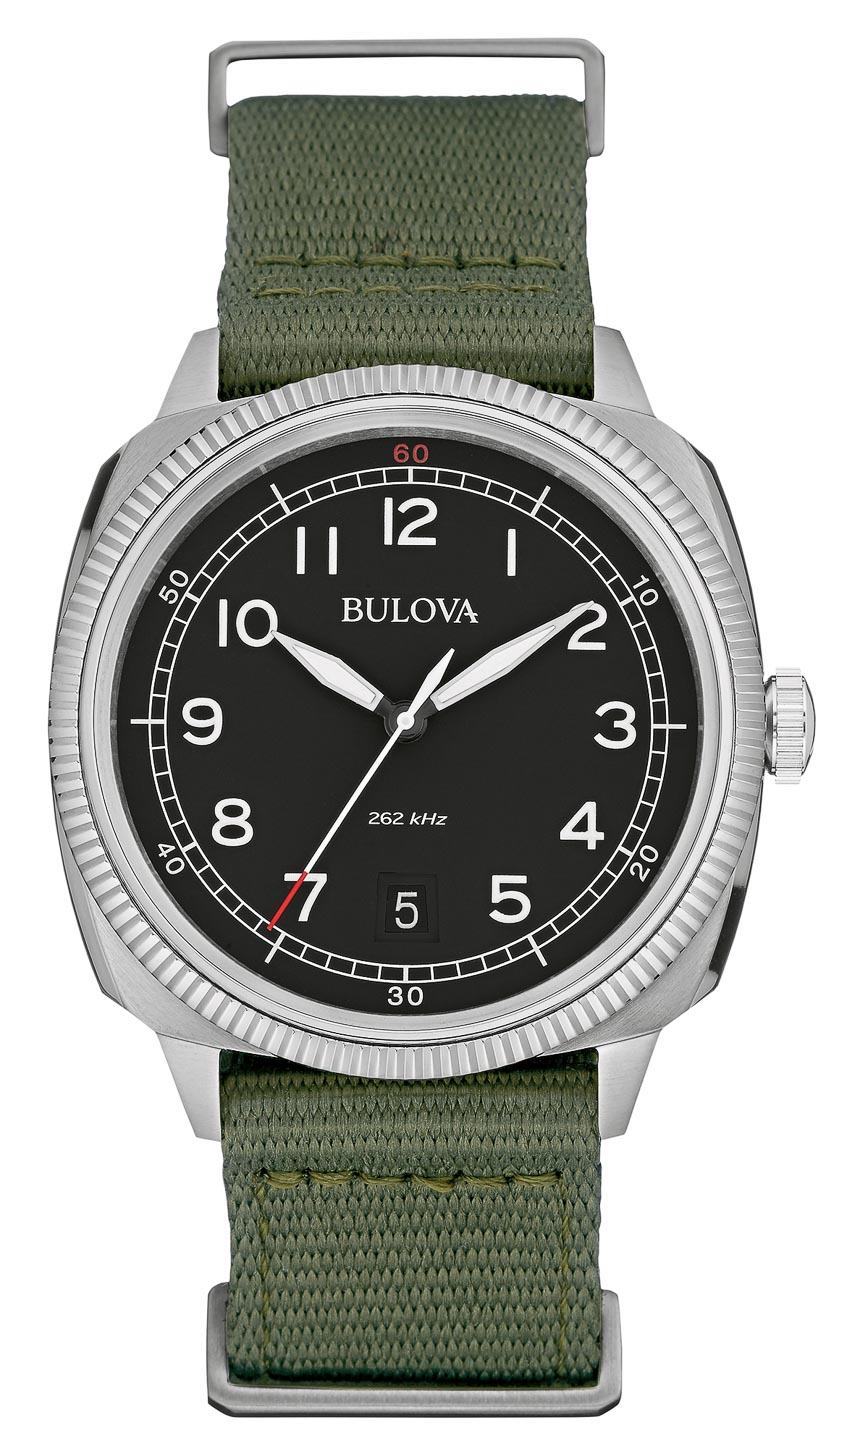 New Bulova Accutron II UHF Sport Watches For Baselworld 2015 | aBlogtoWatch